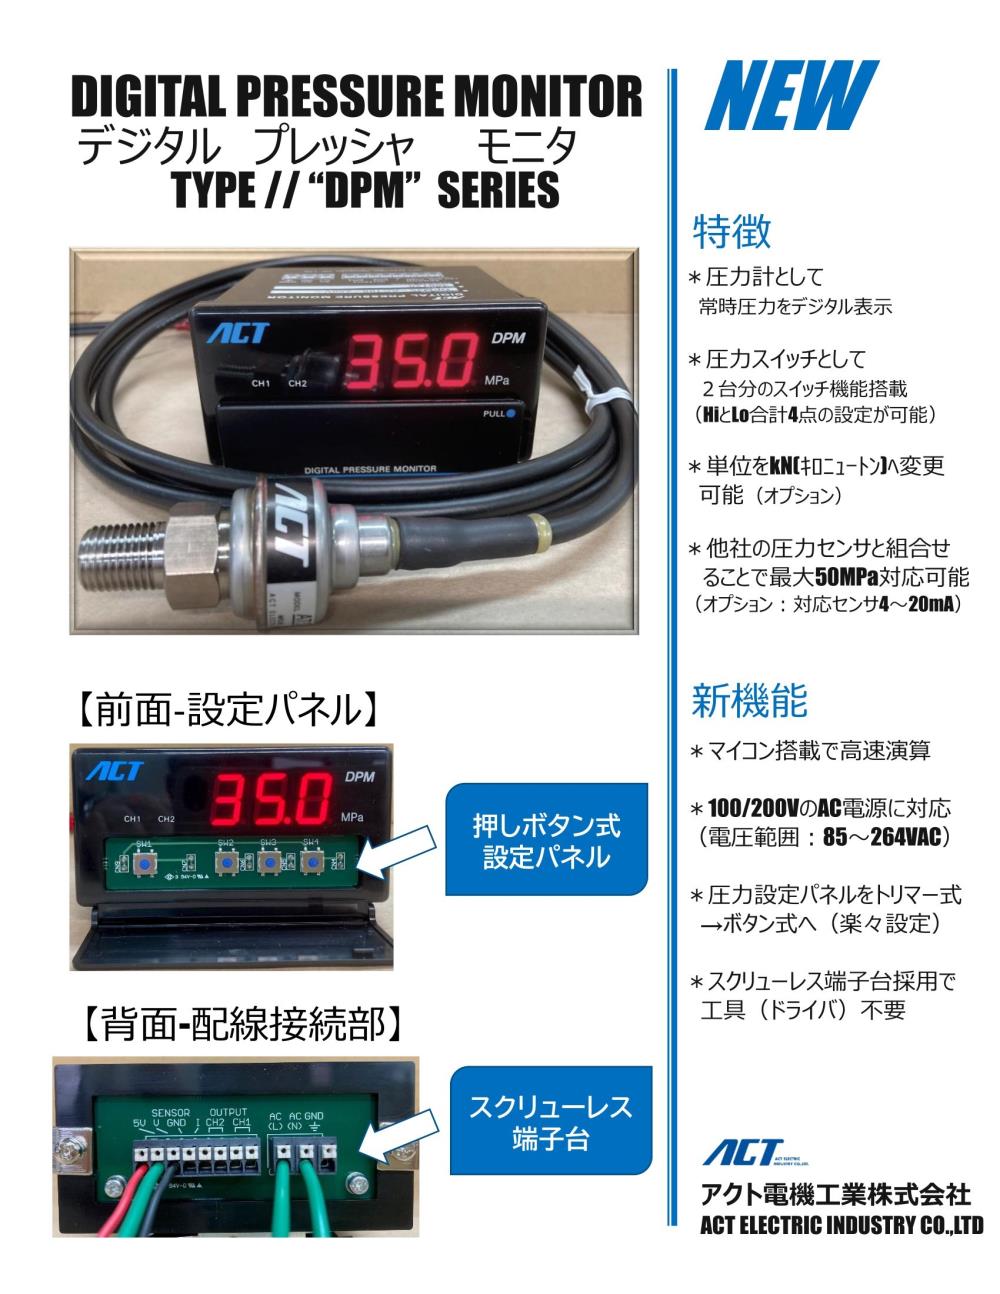 ACT Digital Pressure Monitor DPM15-AC100/250V Series,DPM15-AC100/250V, DPM15-AC100/250V-5, DPM15-AC100/250V-10, ACT, Digital Pressure Monitor,ACT,Instruments and Controls/Monitors